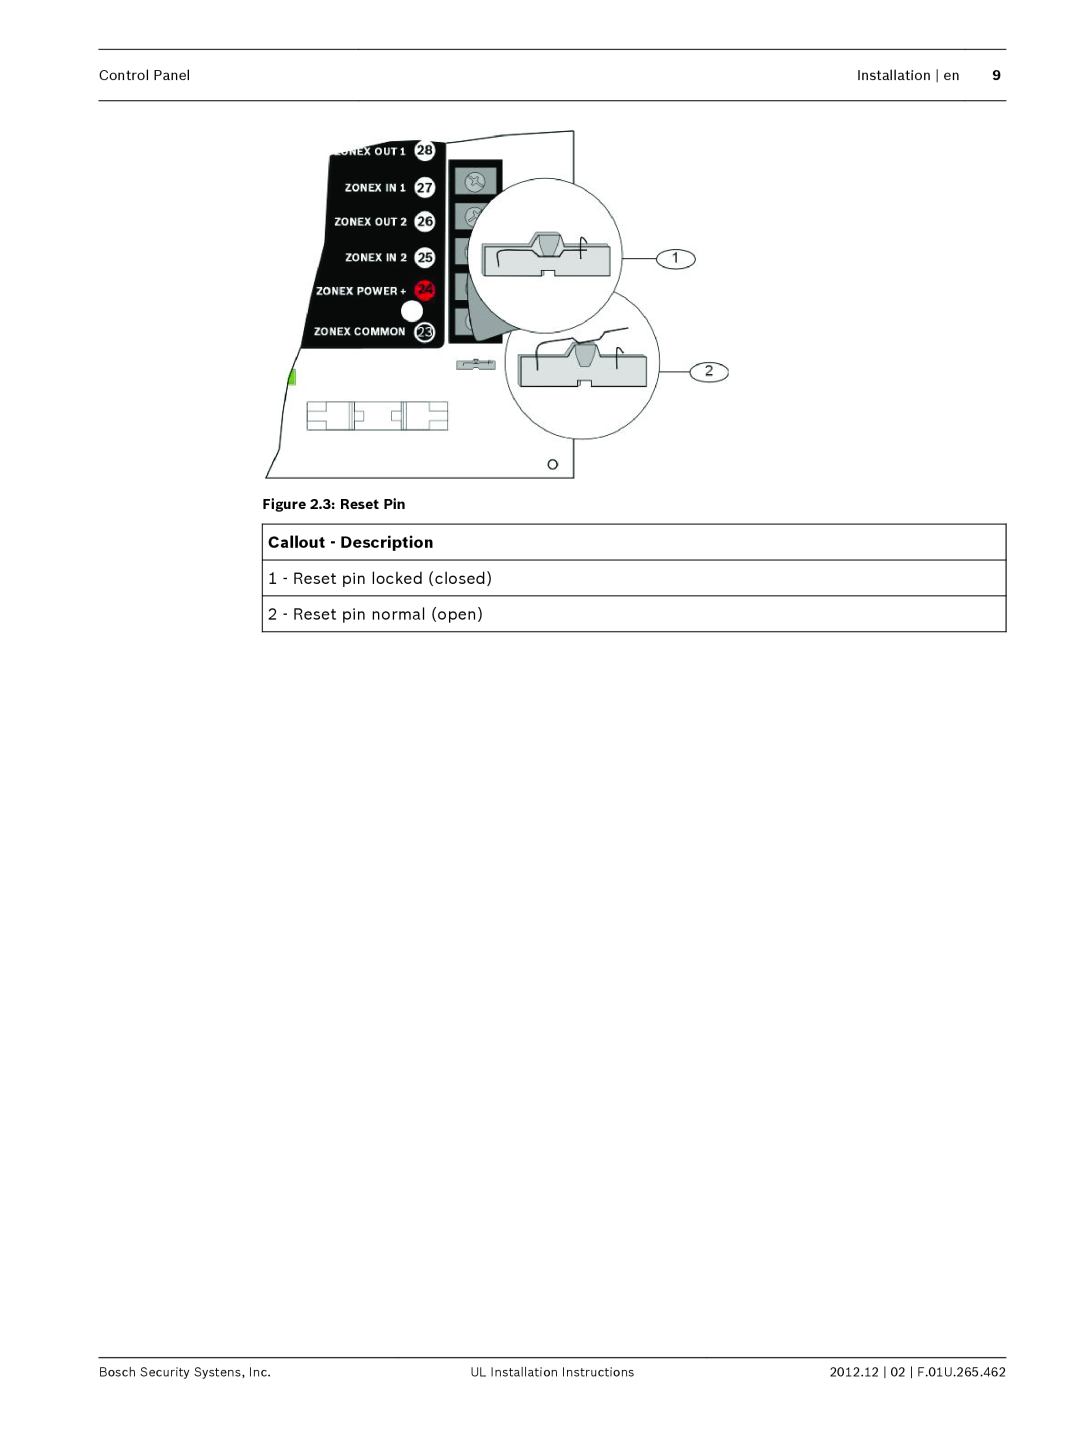 Bosch Appliances D9412GV4 Control Panel, Installation en, 3 Reset Pin, Bosch Security Systens, Inc 